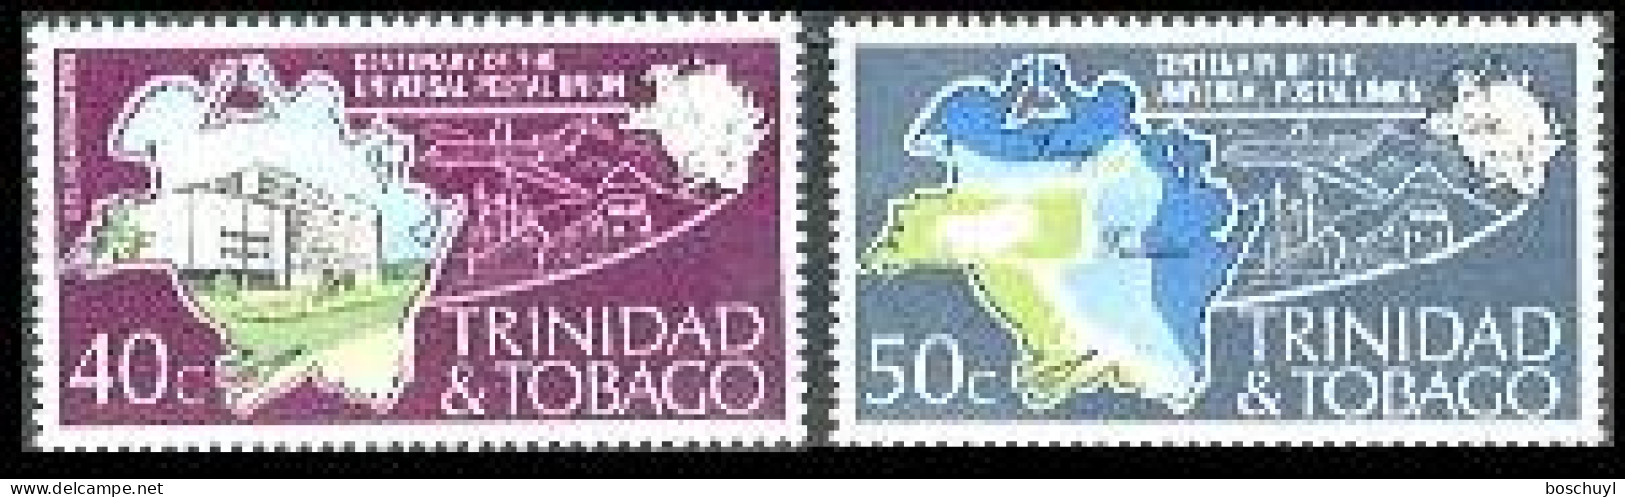 Trinidad And Tobago, 1974, UPU Centenary, Universal Postal Union, United Nations, MNH, Michel 328-329 - Trinité & Tobago (1962-...)